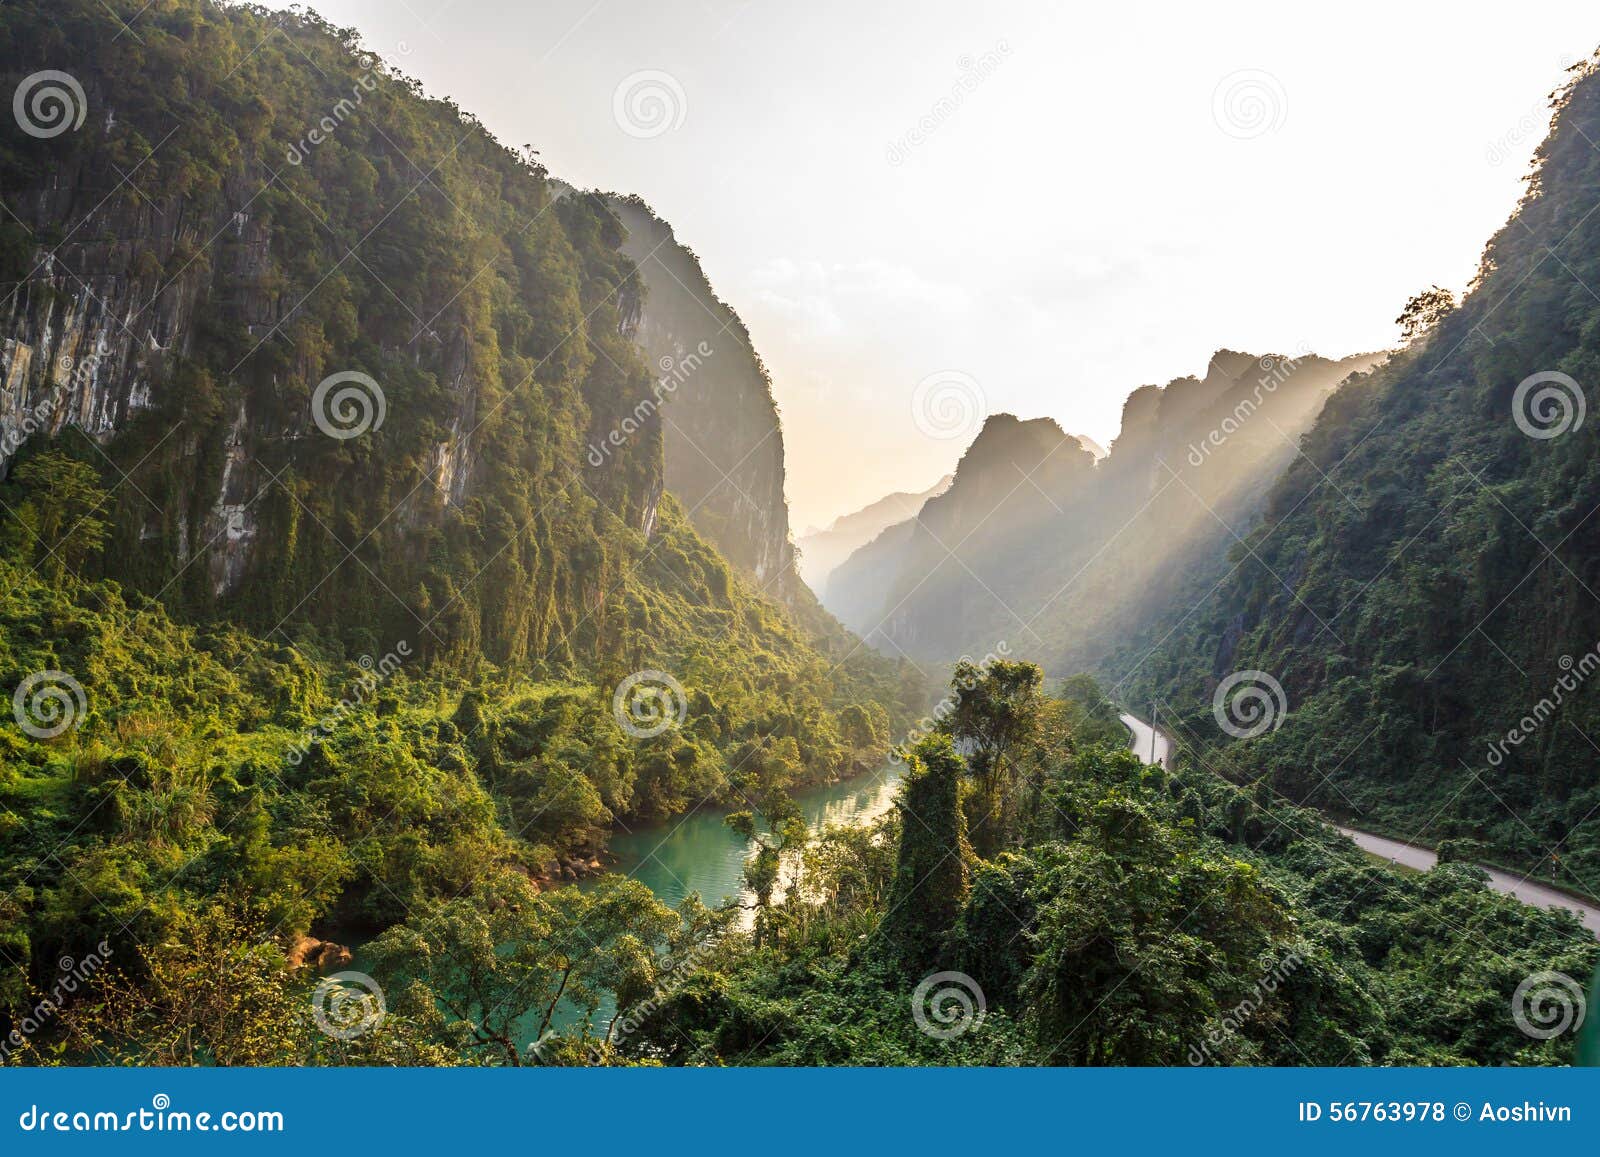 http://thumbs.dreamstime.com/z/mountain-river-quang-binh-province-suoi-moong-vietnam-56763978.jpg